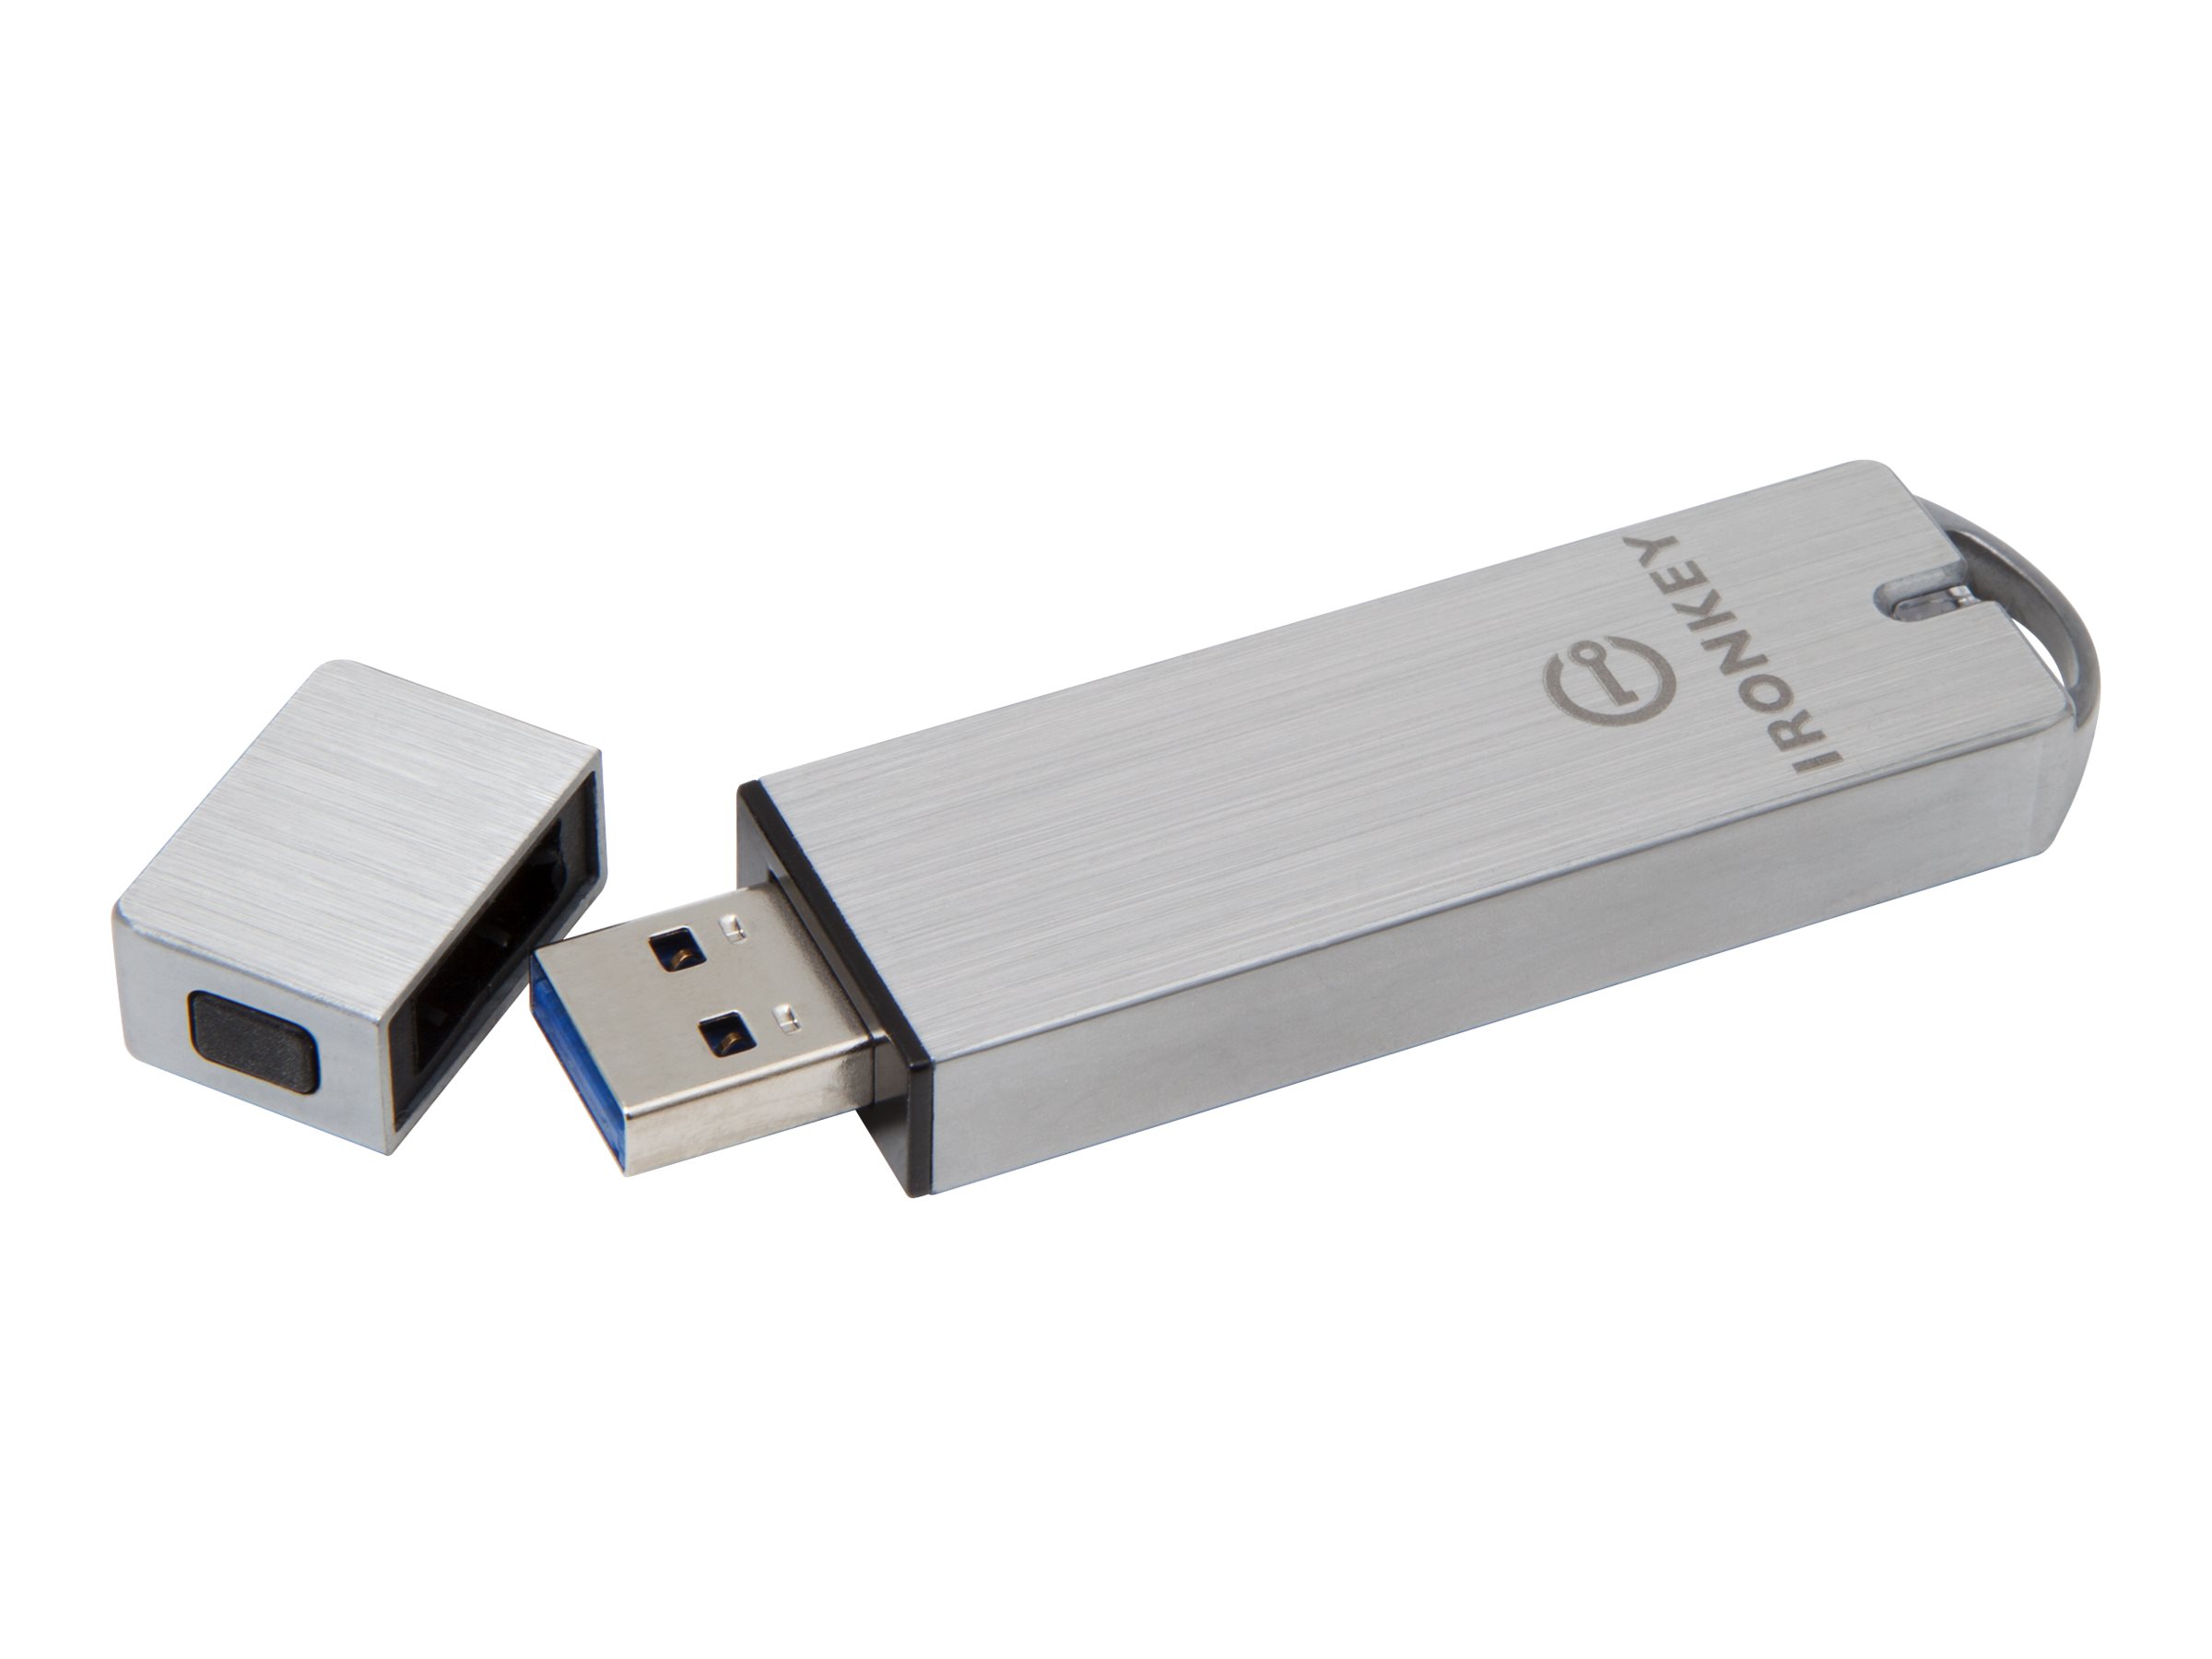 IronKey Enterprise S1000 - USB-Flash-Laufwerk - verschlsselt - 128 GB - USB 3.0 - FIPS 140-2 Level 3